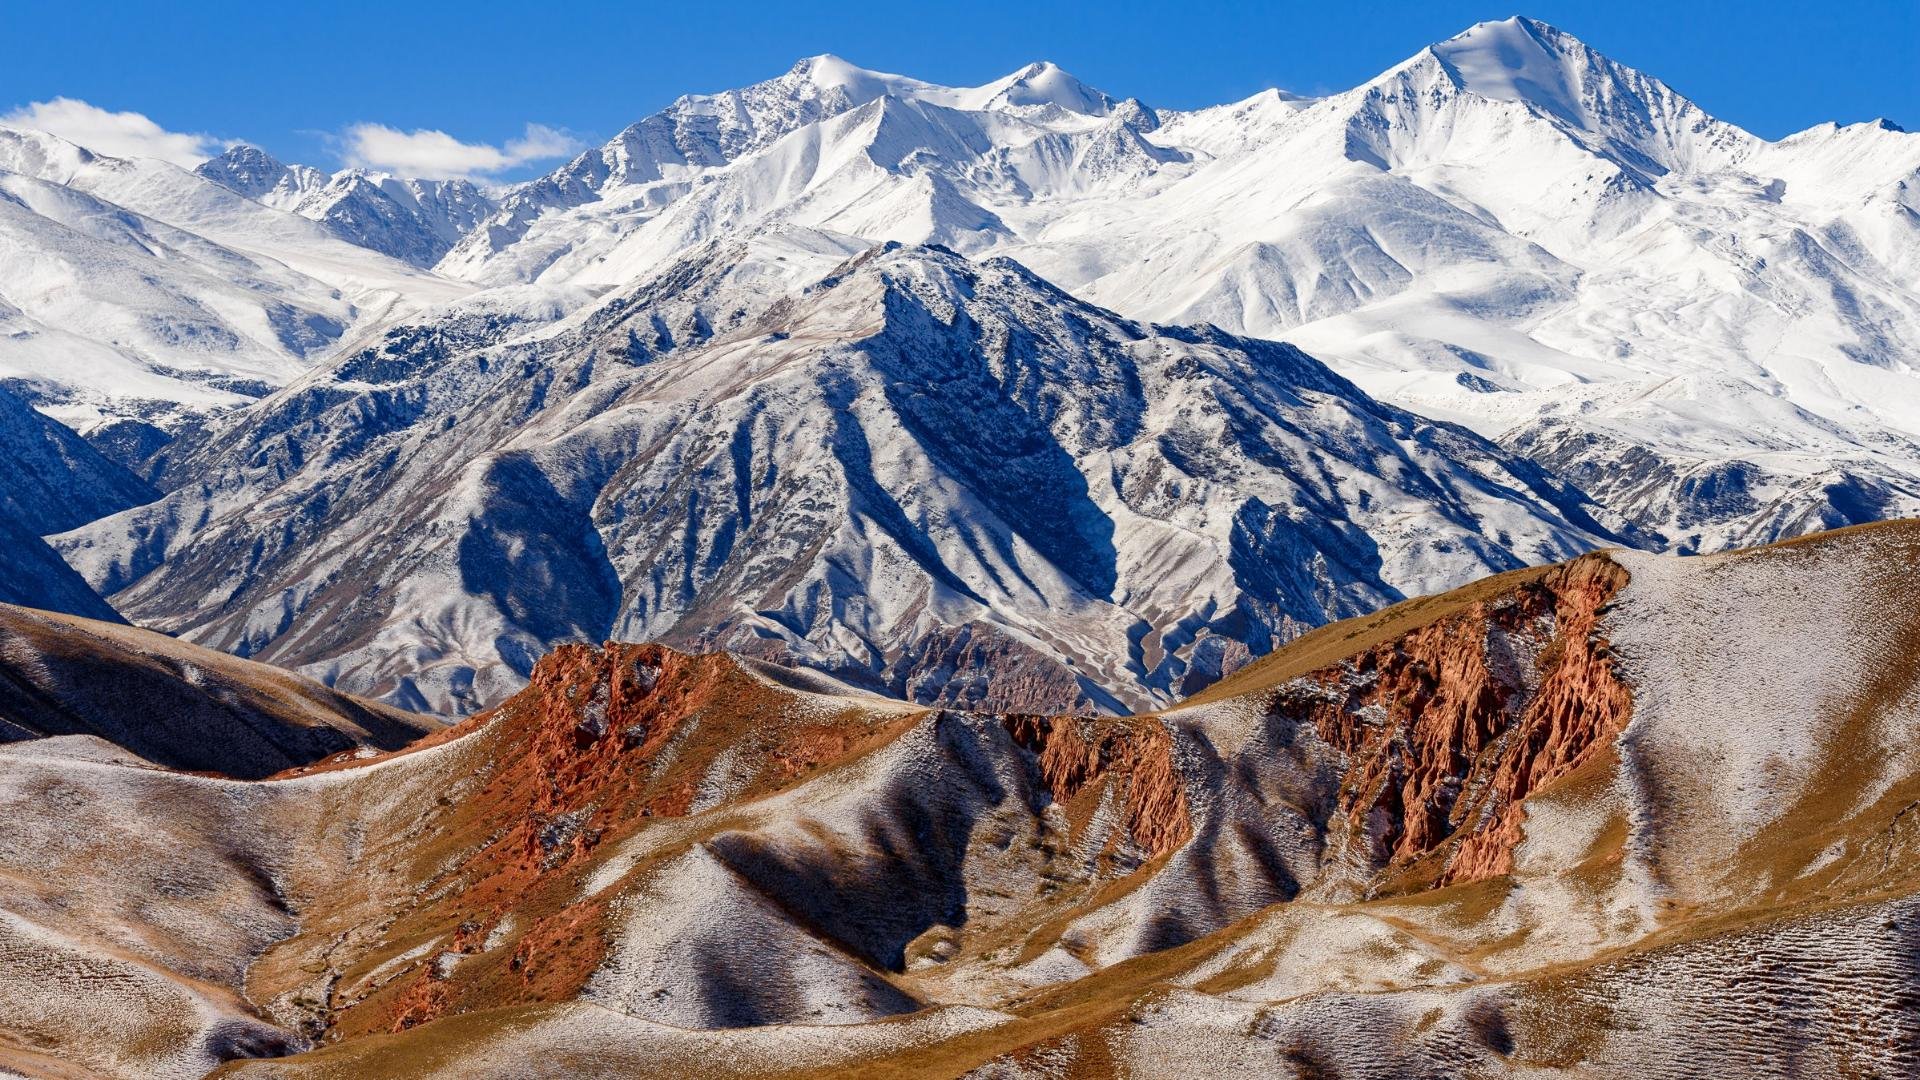 Ала тоо кыргызстан. Ала-ТОО Киргизия горы. Горы Тянь Шань. Киргизия горы Тянь-Шань. Природа Кыргызстана ала ТОО.